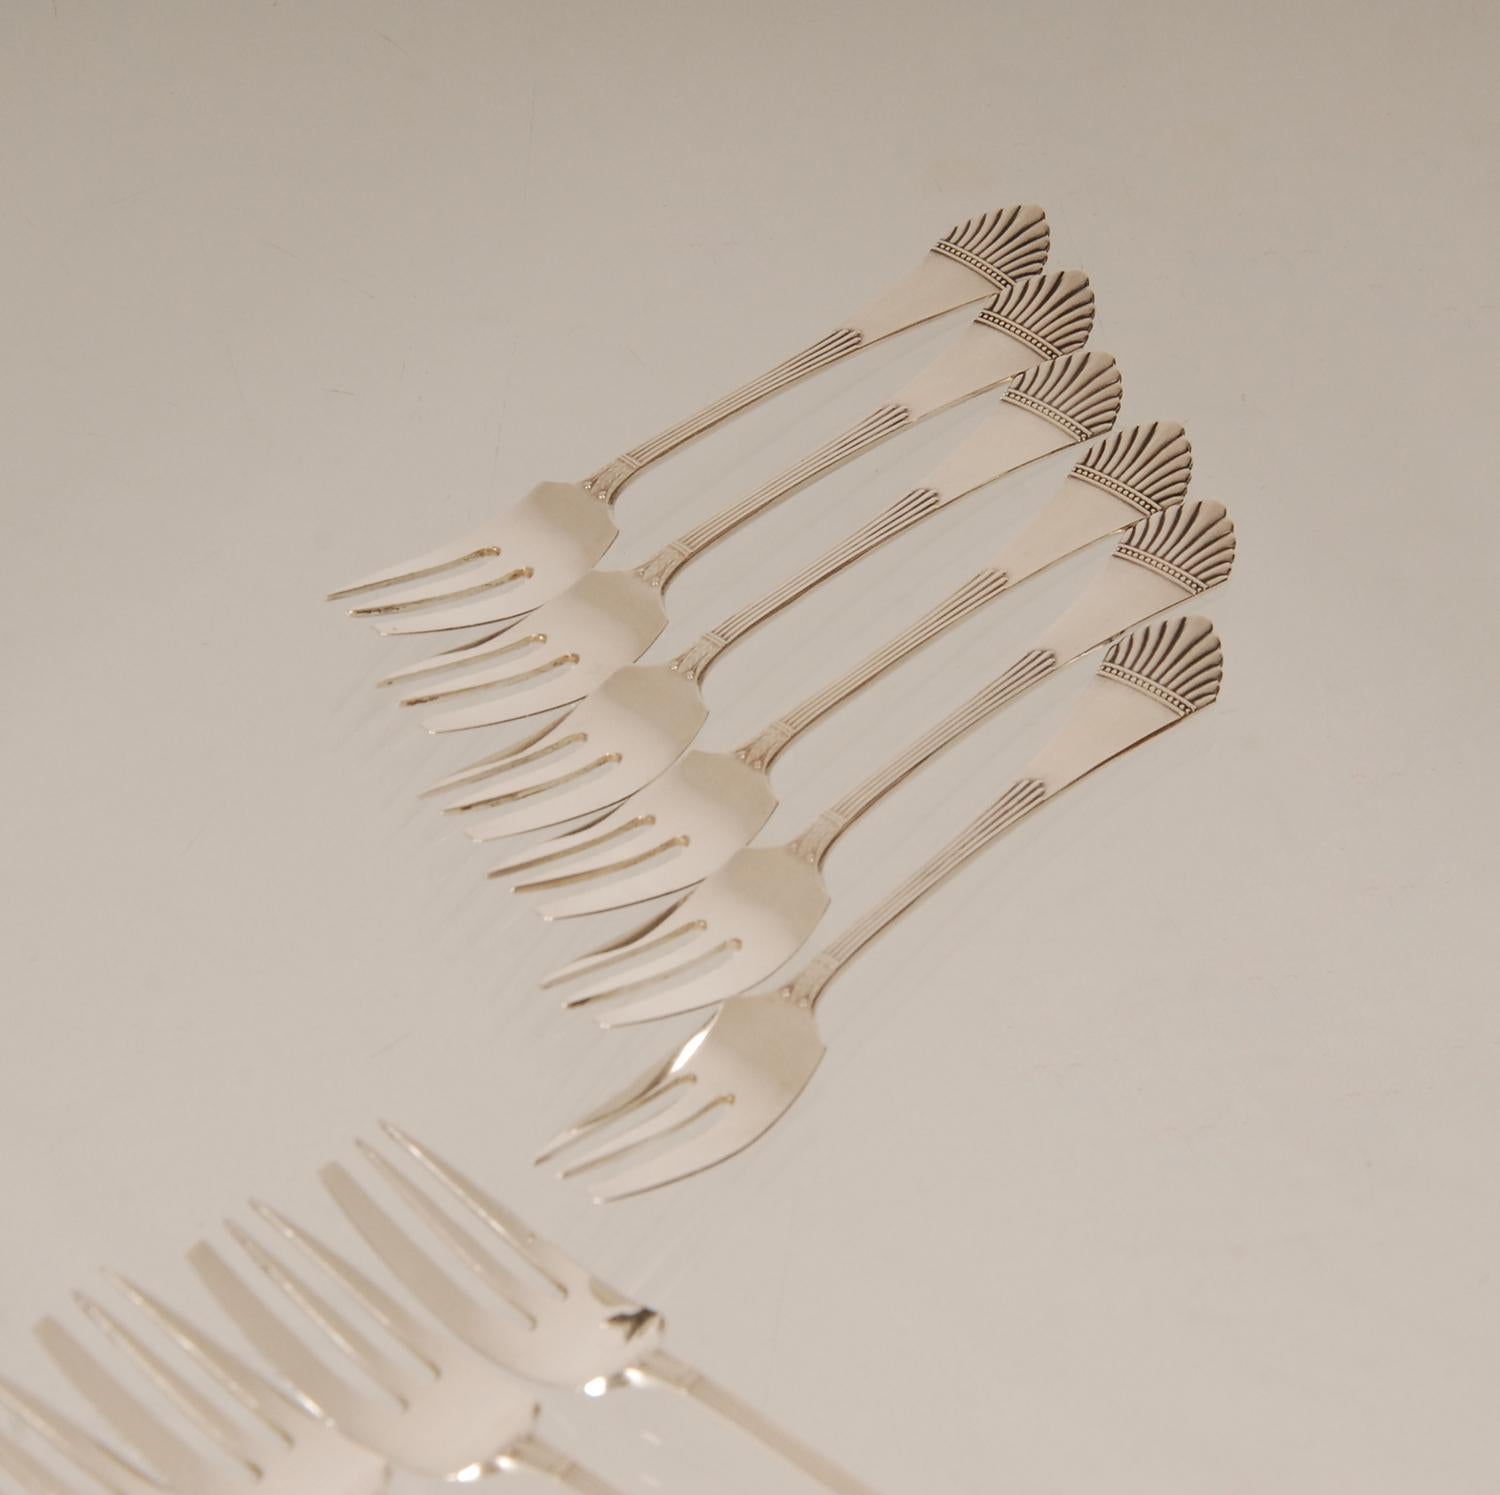 Art Deco Sterling Silver Flatware 1920s Spoons, Forks, Cake Server Set 31 Pieces 1